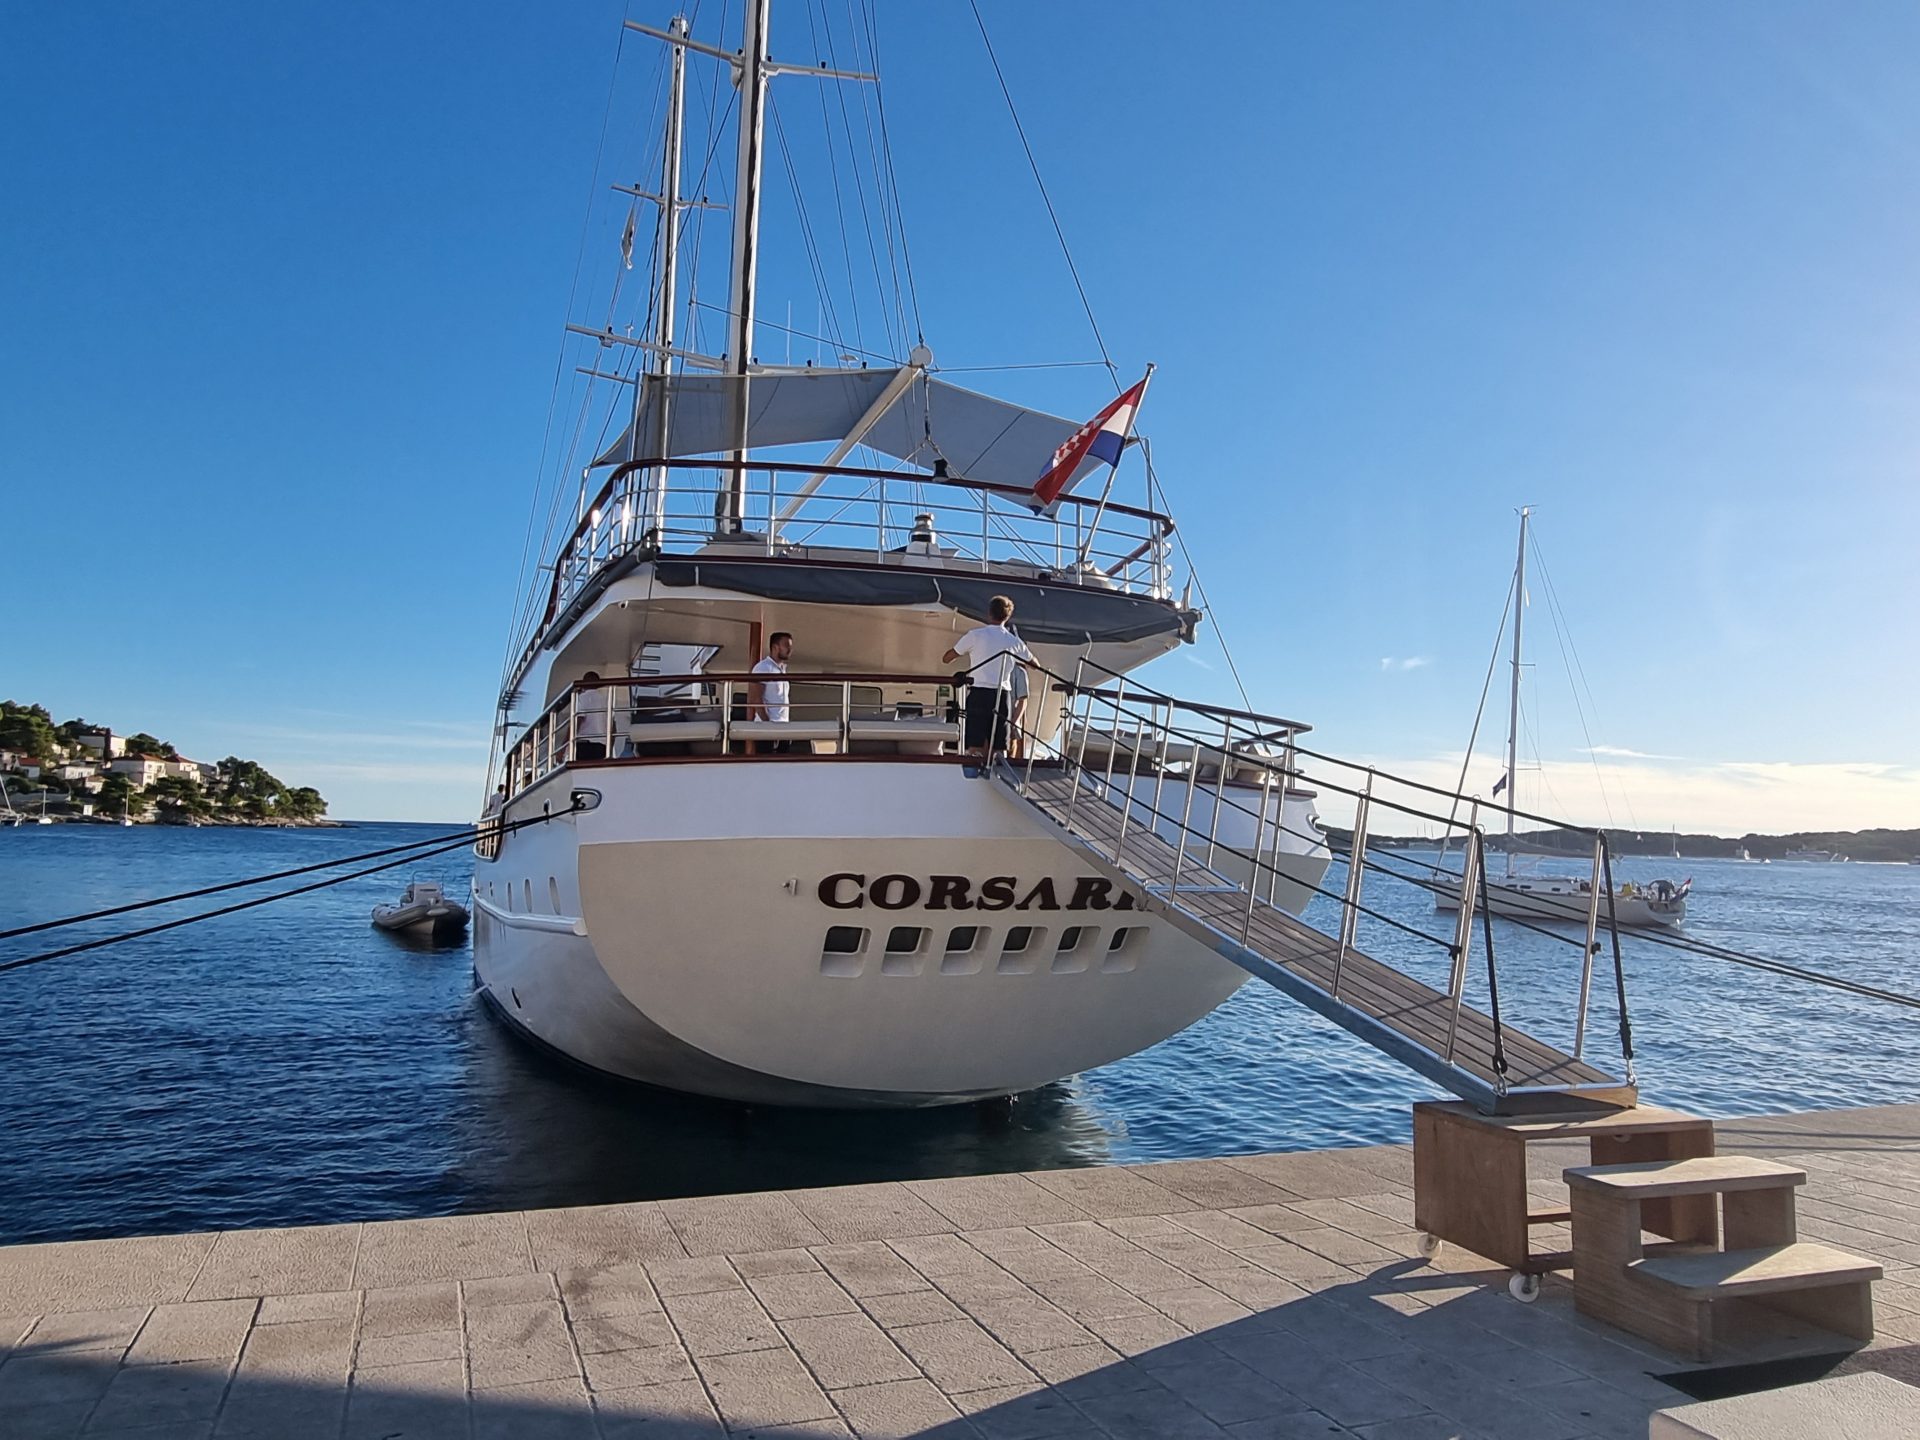 Corsario yacht charter famtrip